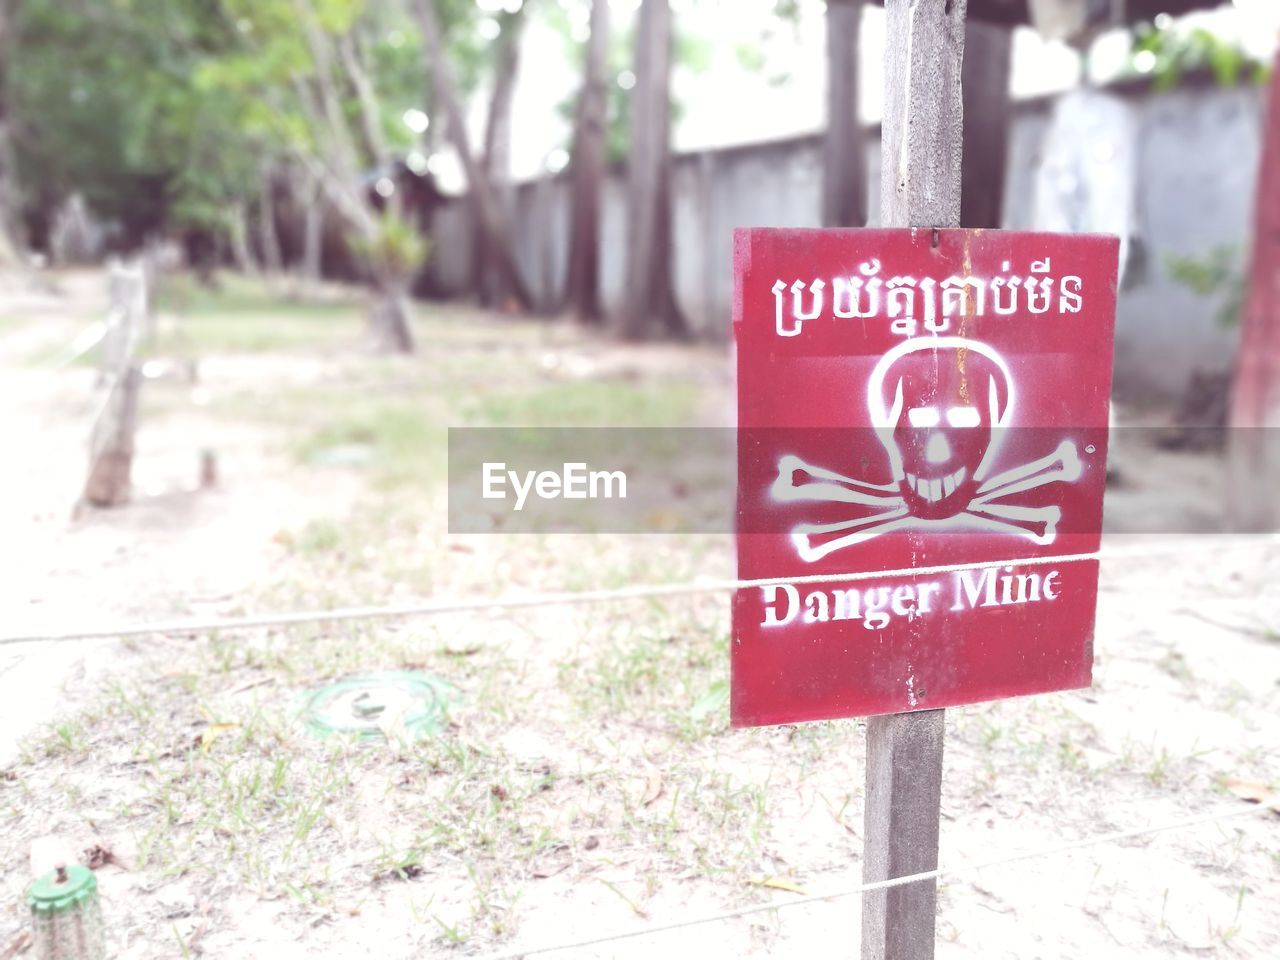 Land mine warning sign on pole at field